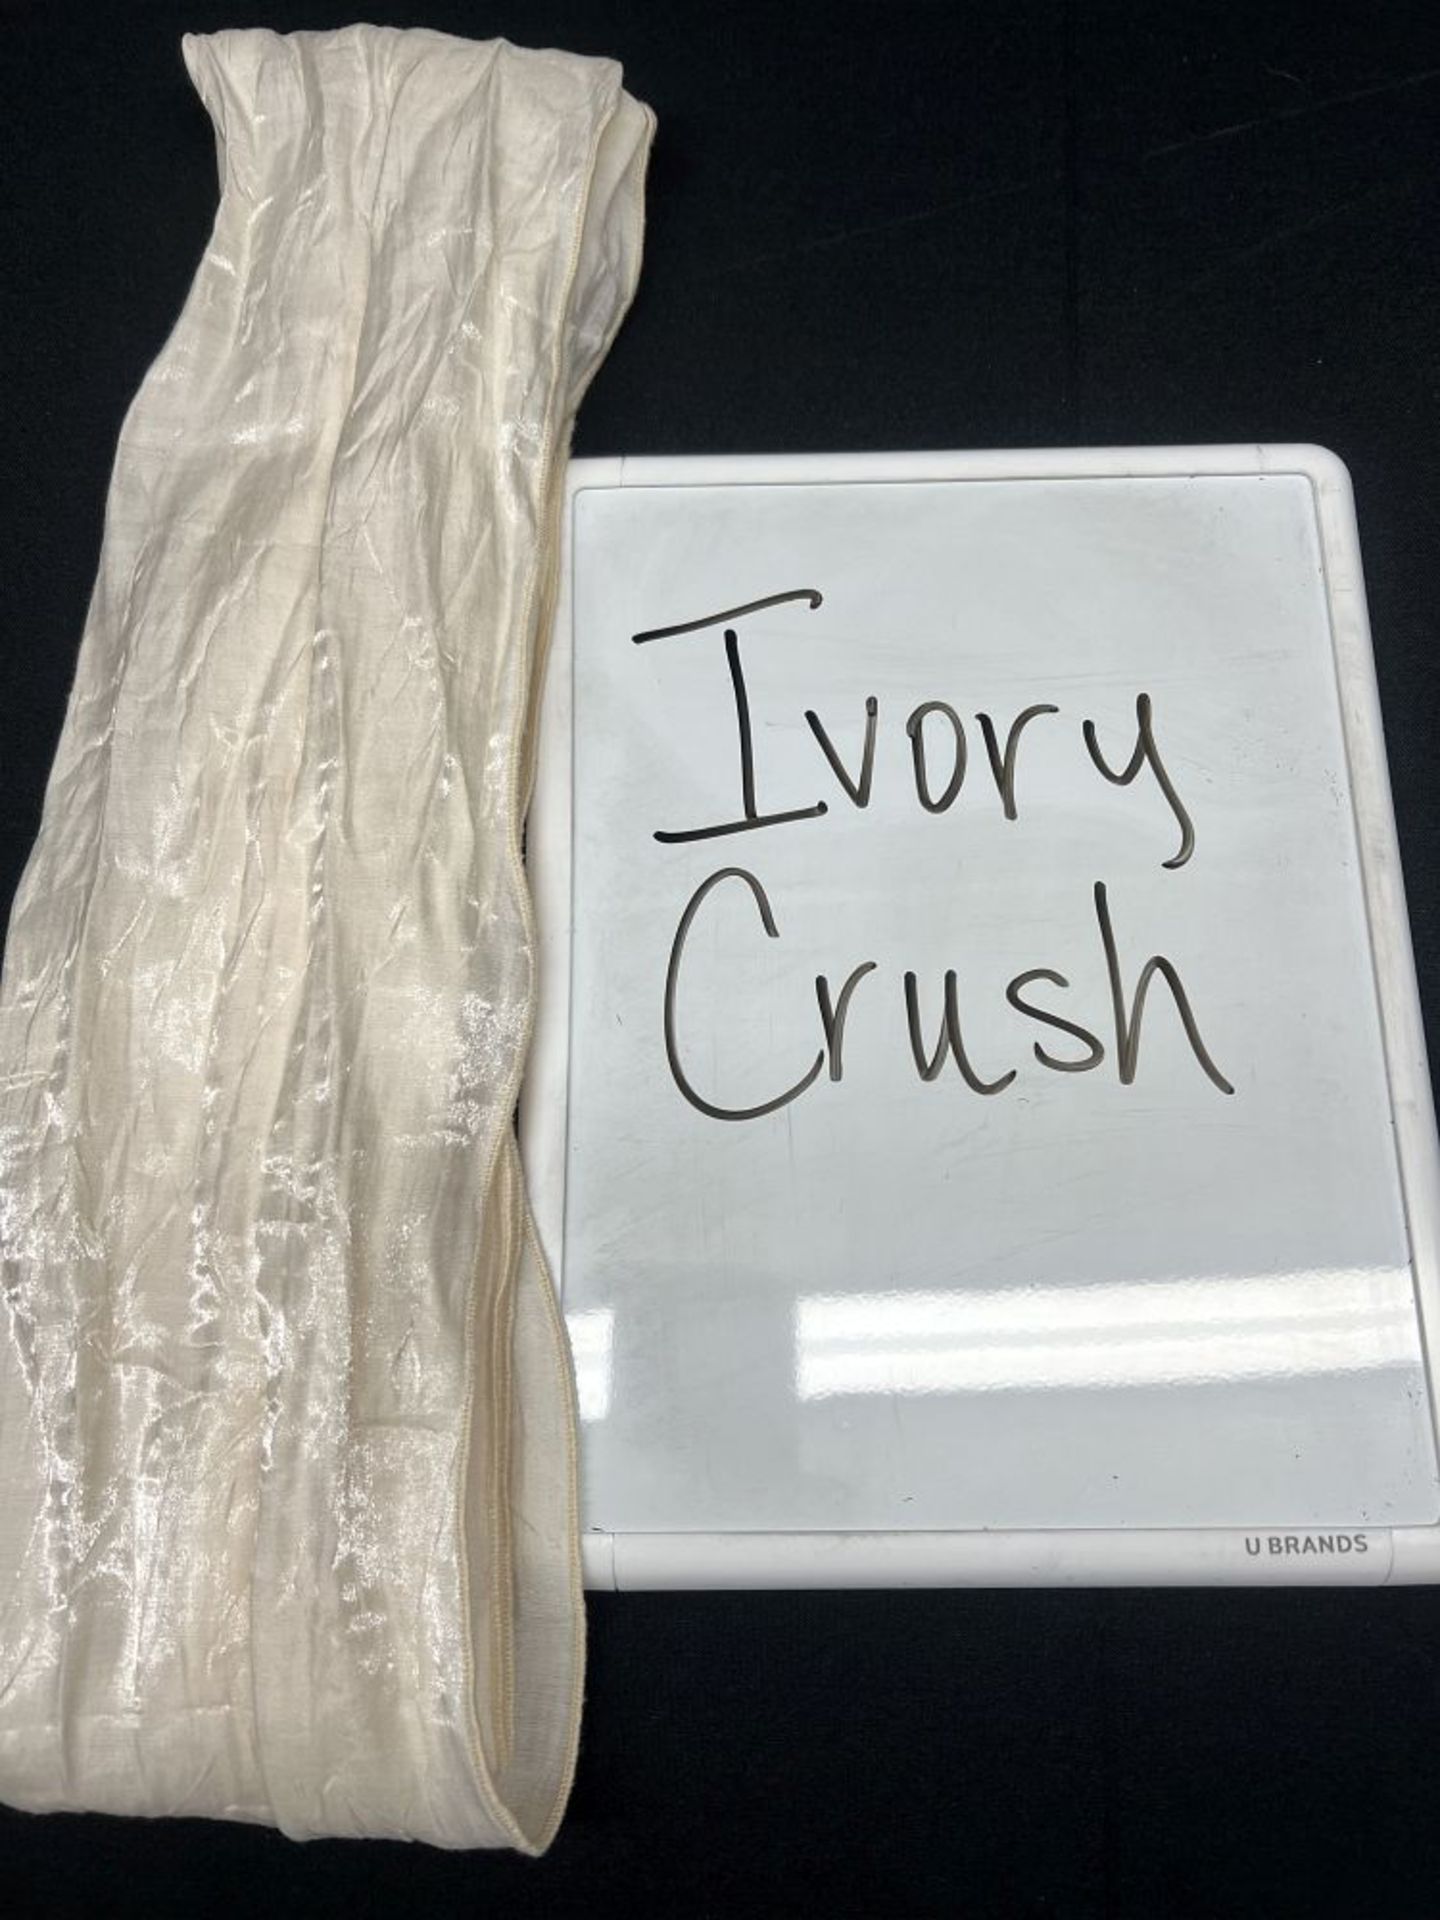 60" x 60" Ivory Crush Tablecloth